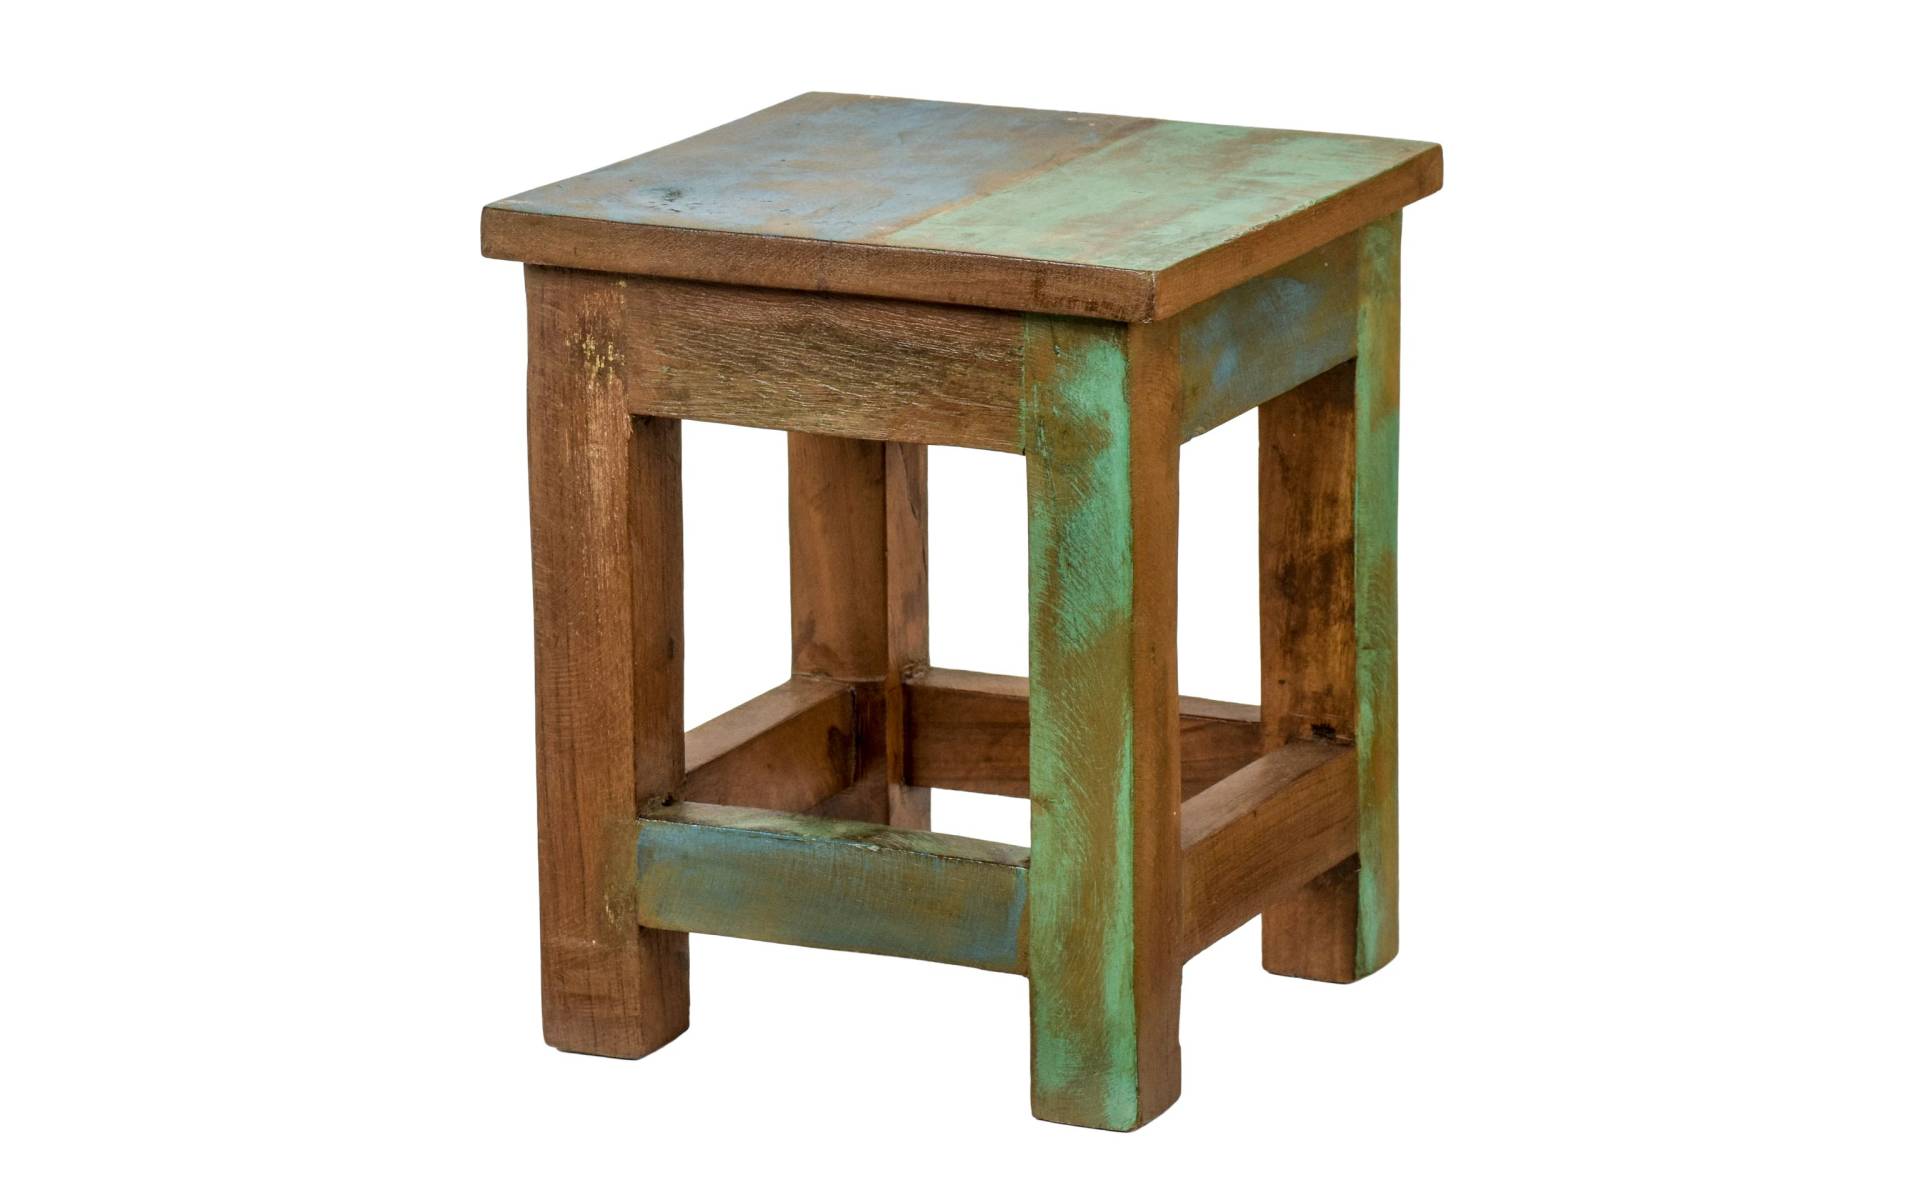 Stolička z antik teakového dreva, "GOA" štýl, 25x25x30cm